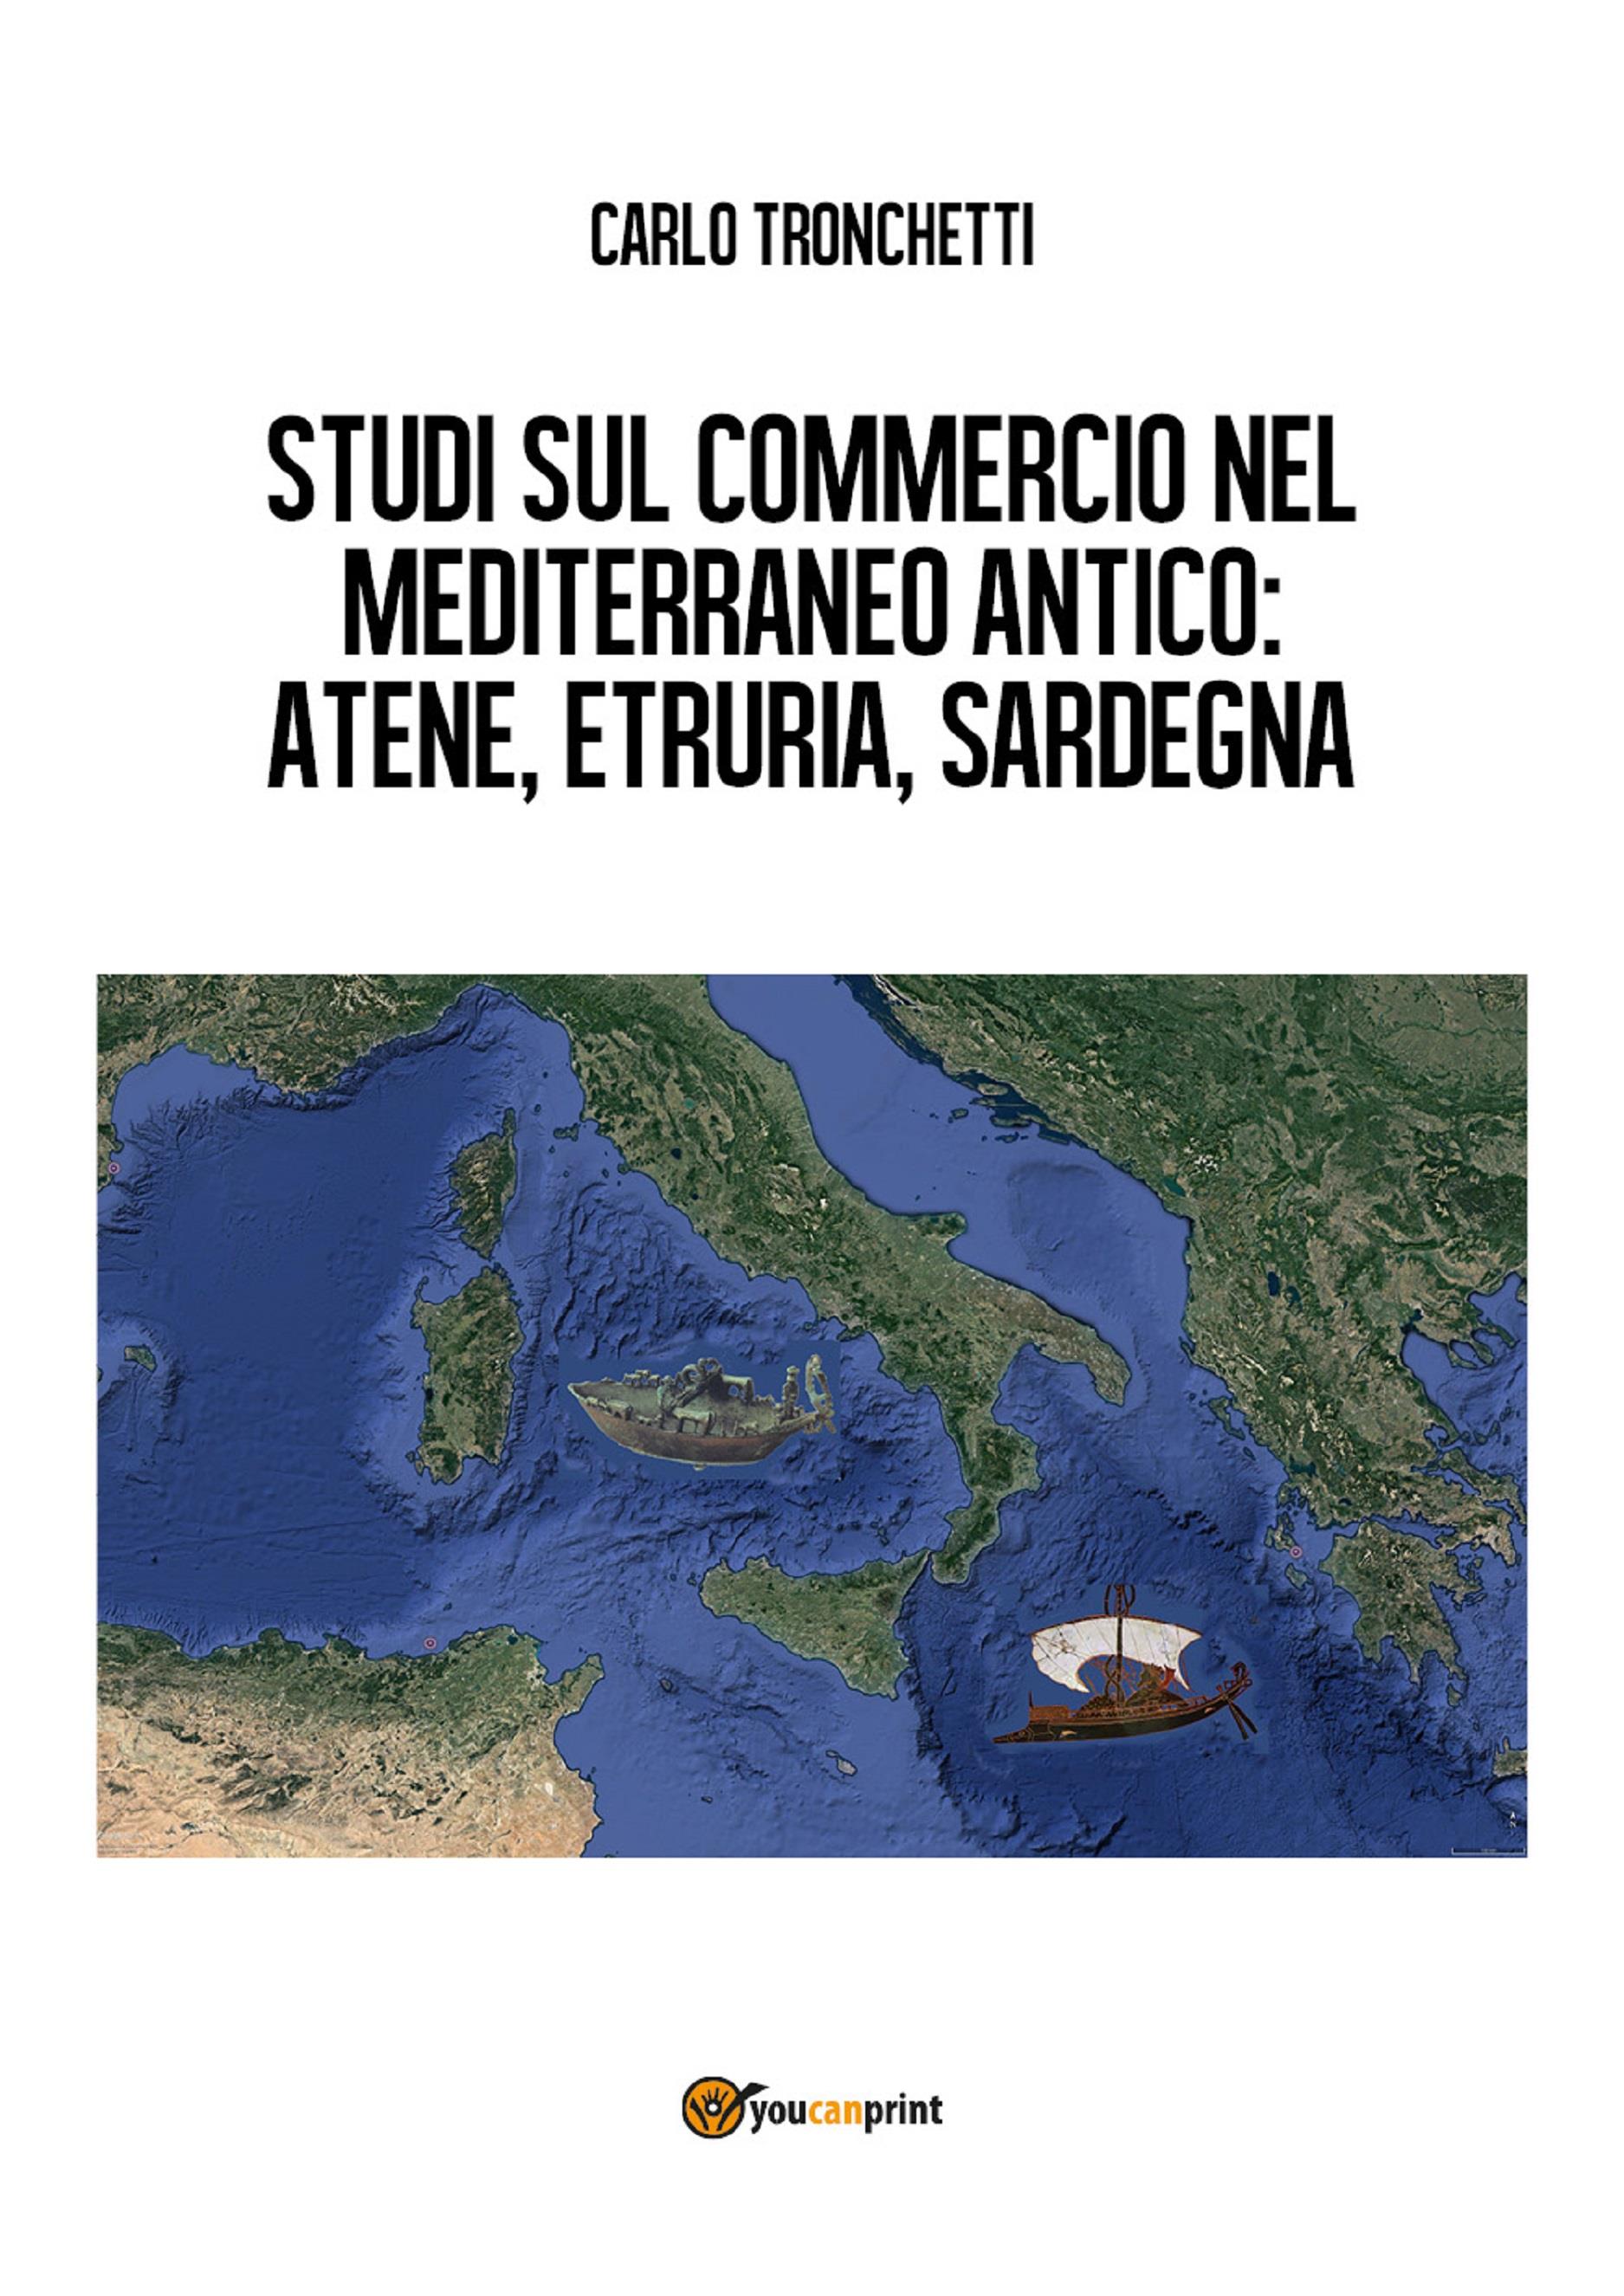 Studi sul commercio nel Mediterraneo antico: Atene, Etruria, Sardegna